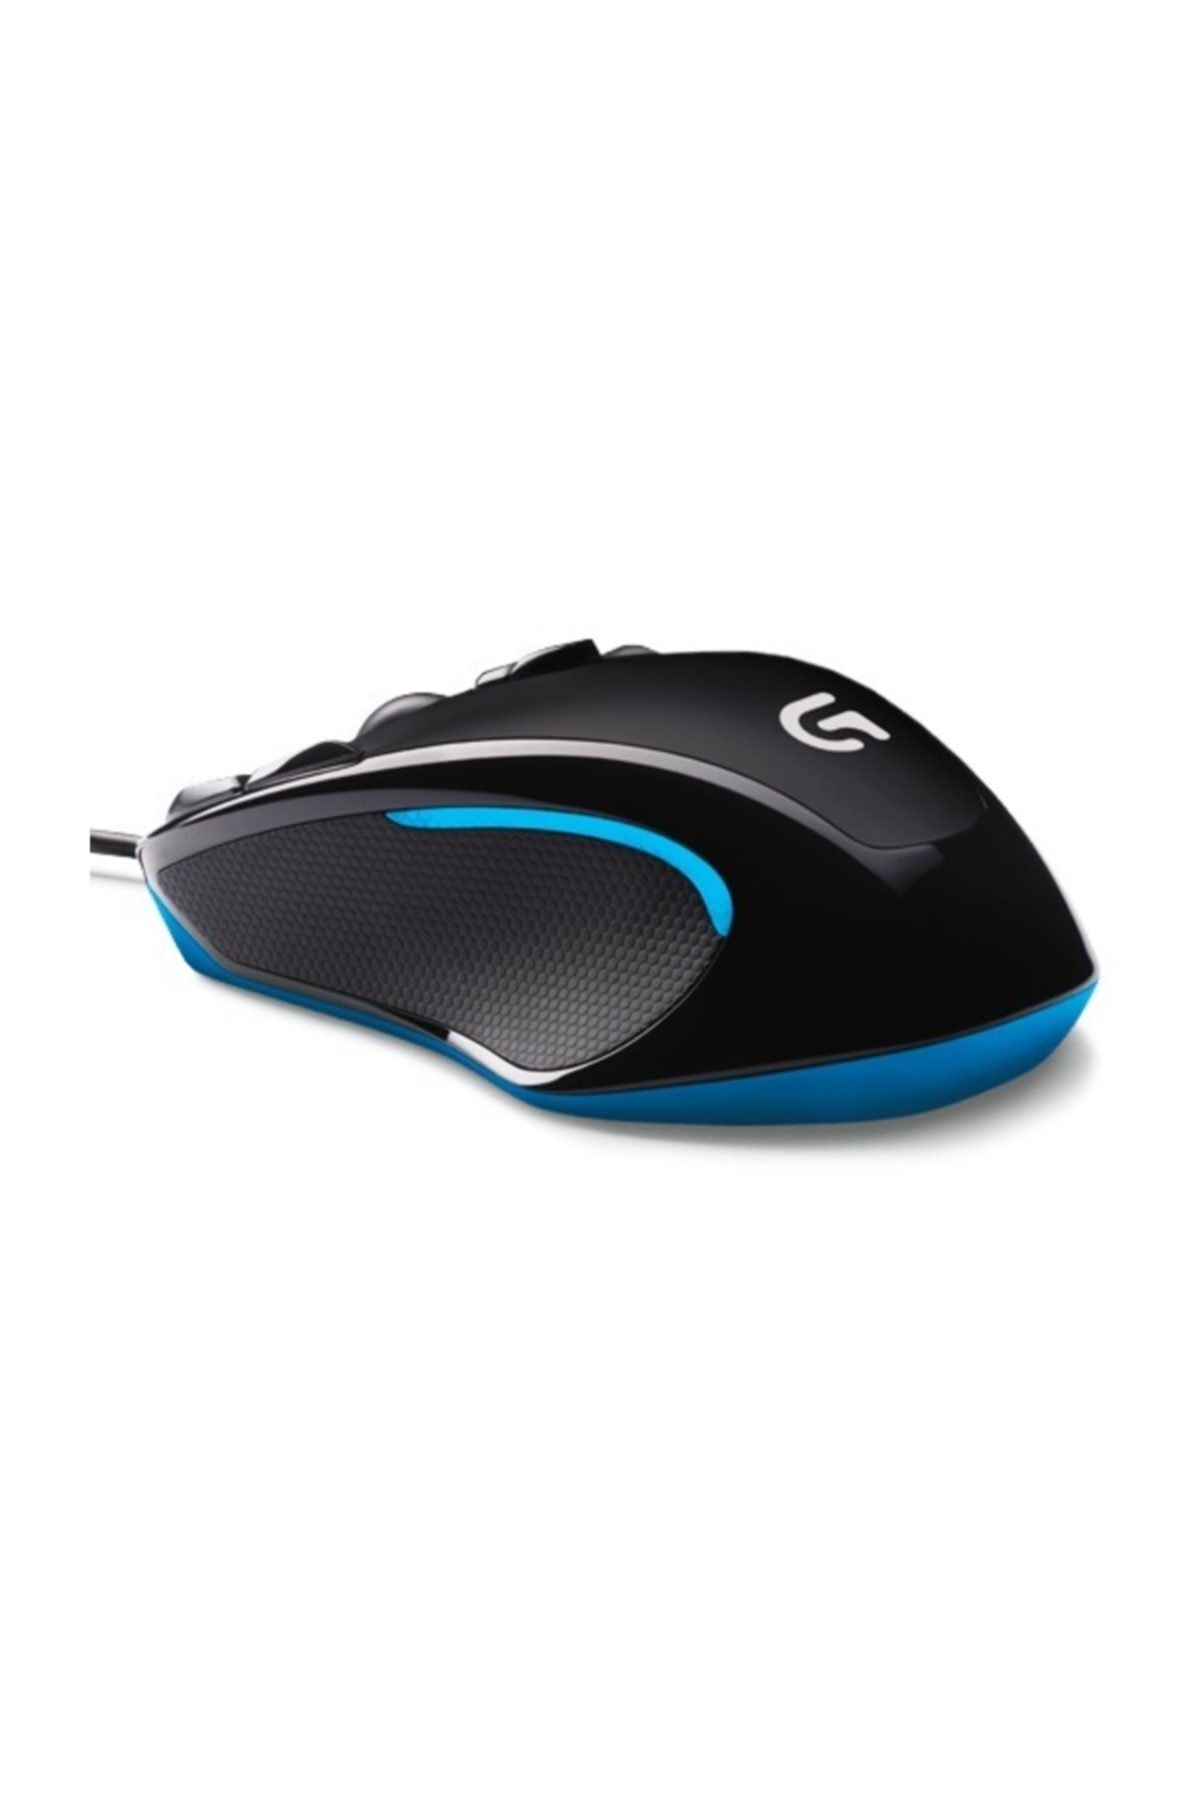 logitech G300s Oyuncu Mouse Usb 910-004346